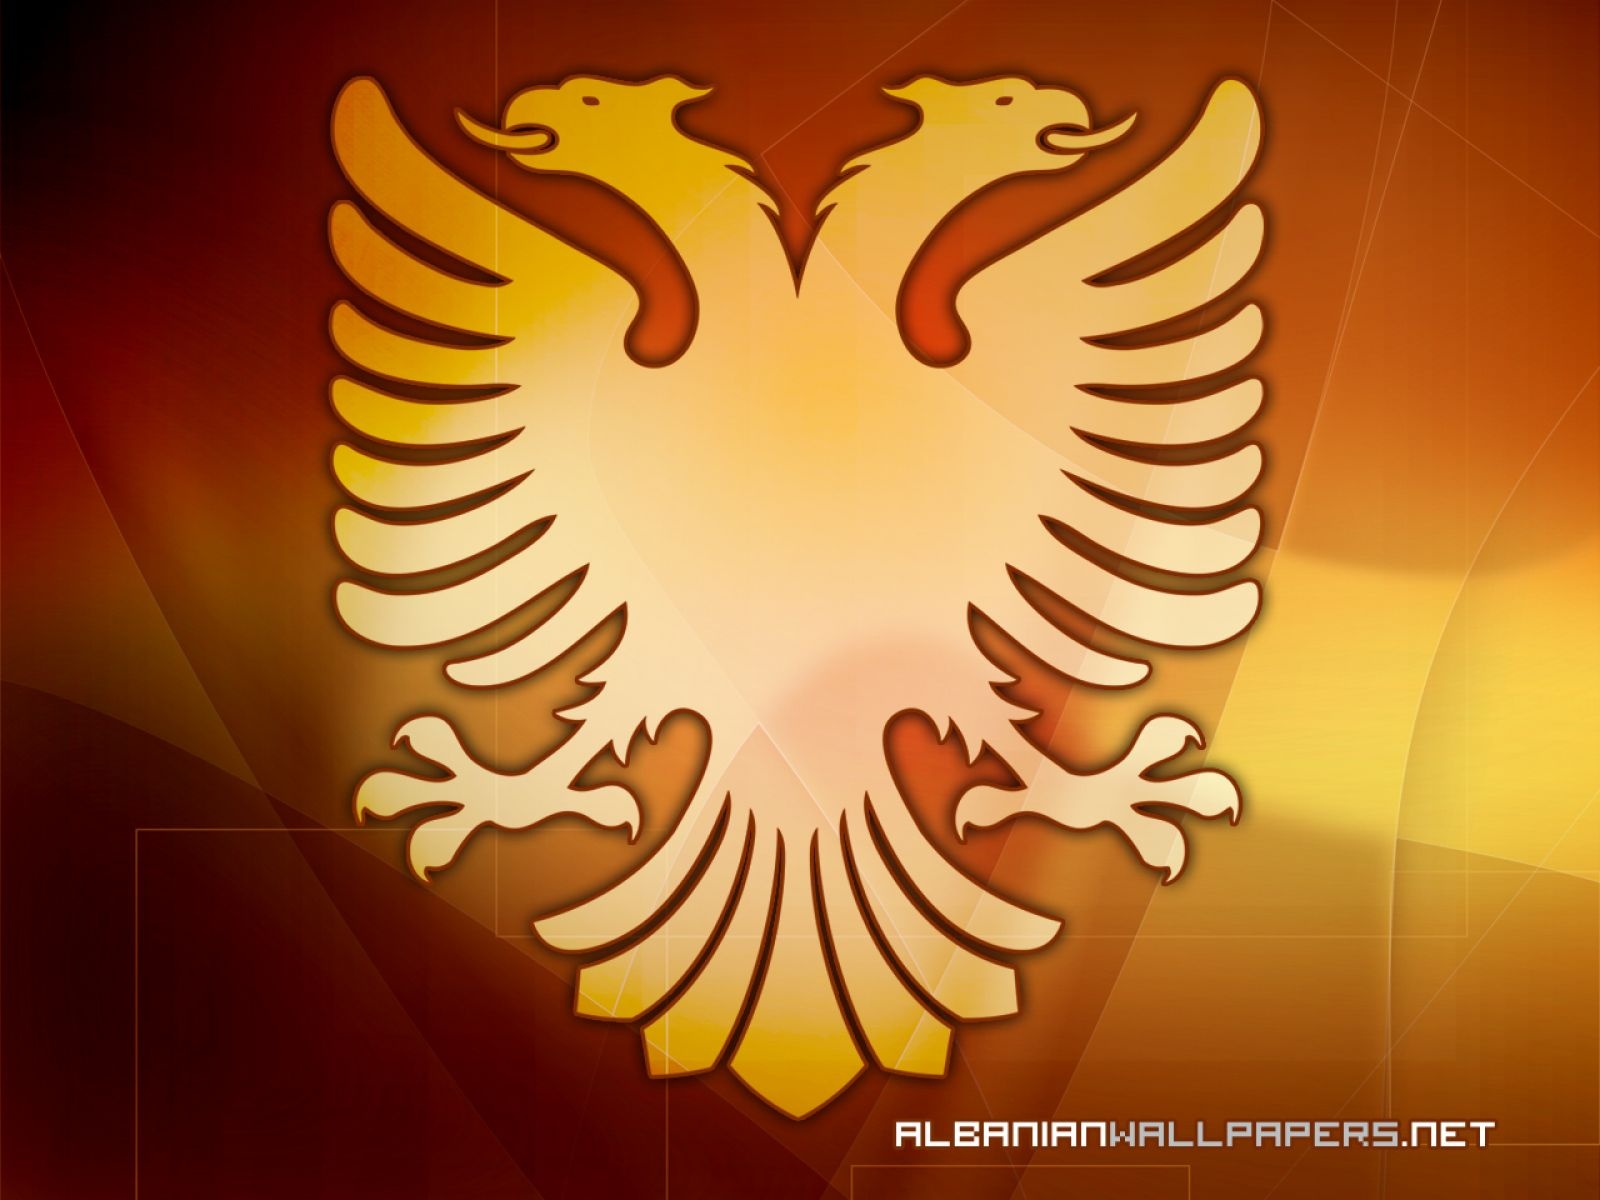 Albanian Techno Eagle